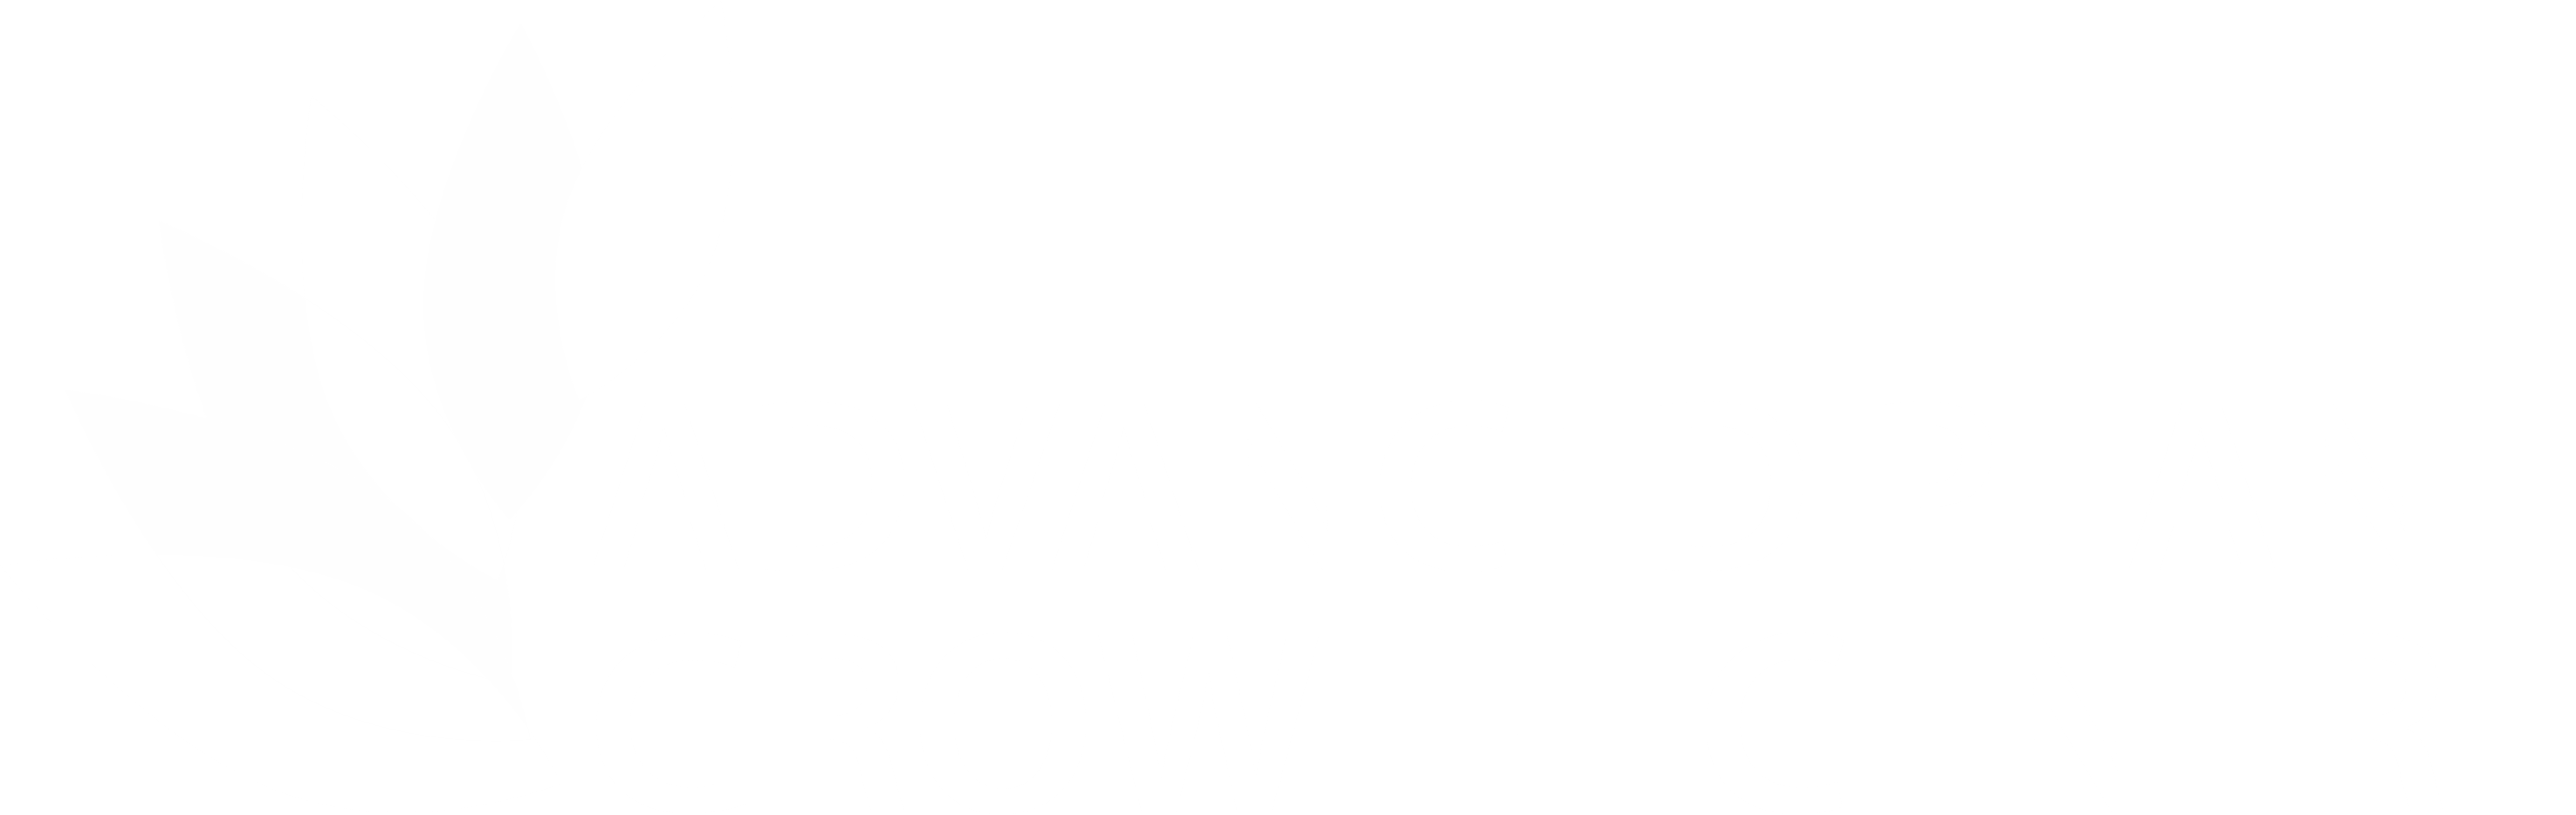 Advanced Plant Growth Centre logo